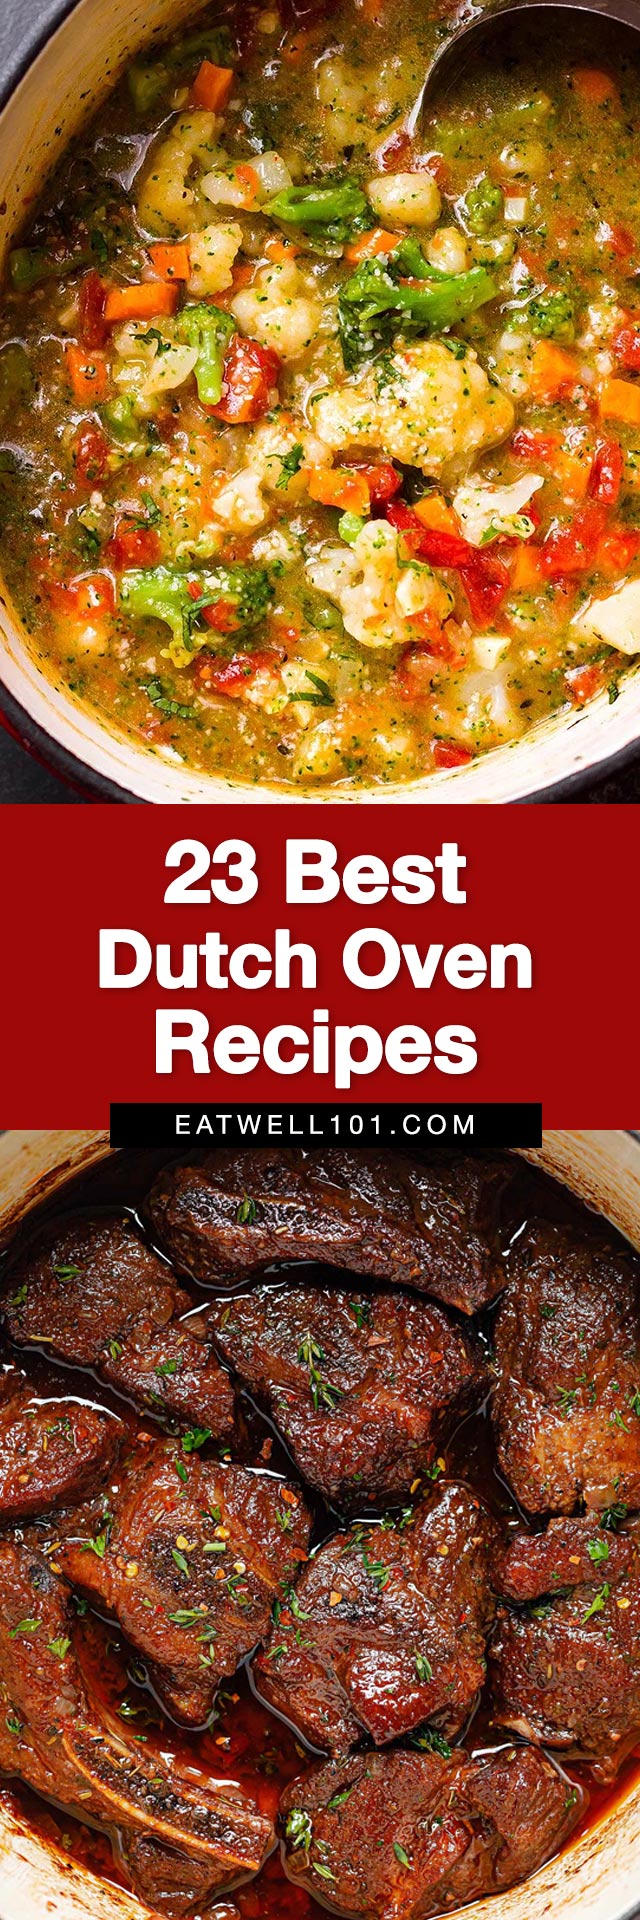 https://www.eatwell101.com/wp-content/uploads/2021/12/best-dutch-oven-recipes-1.jpg